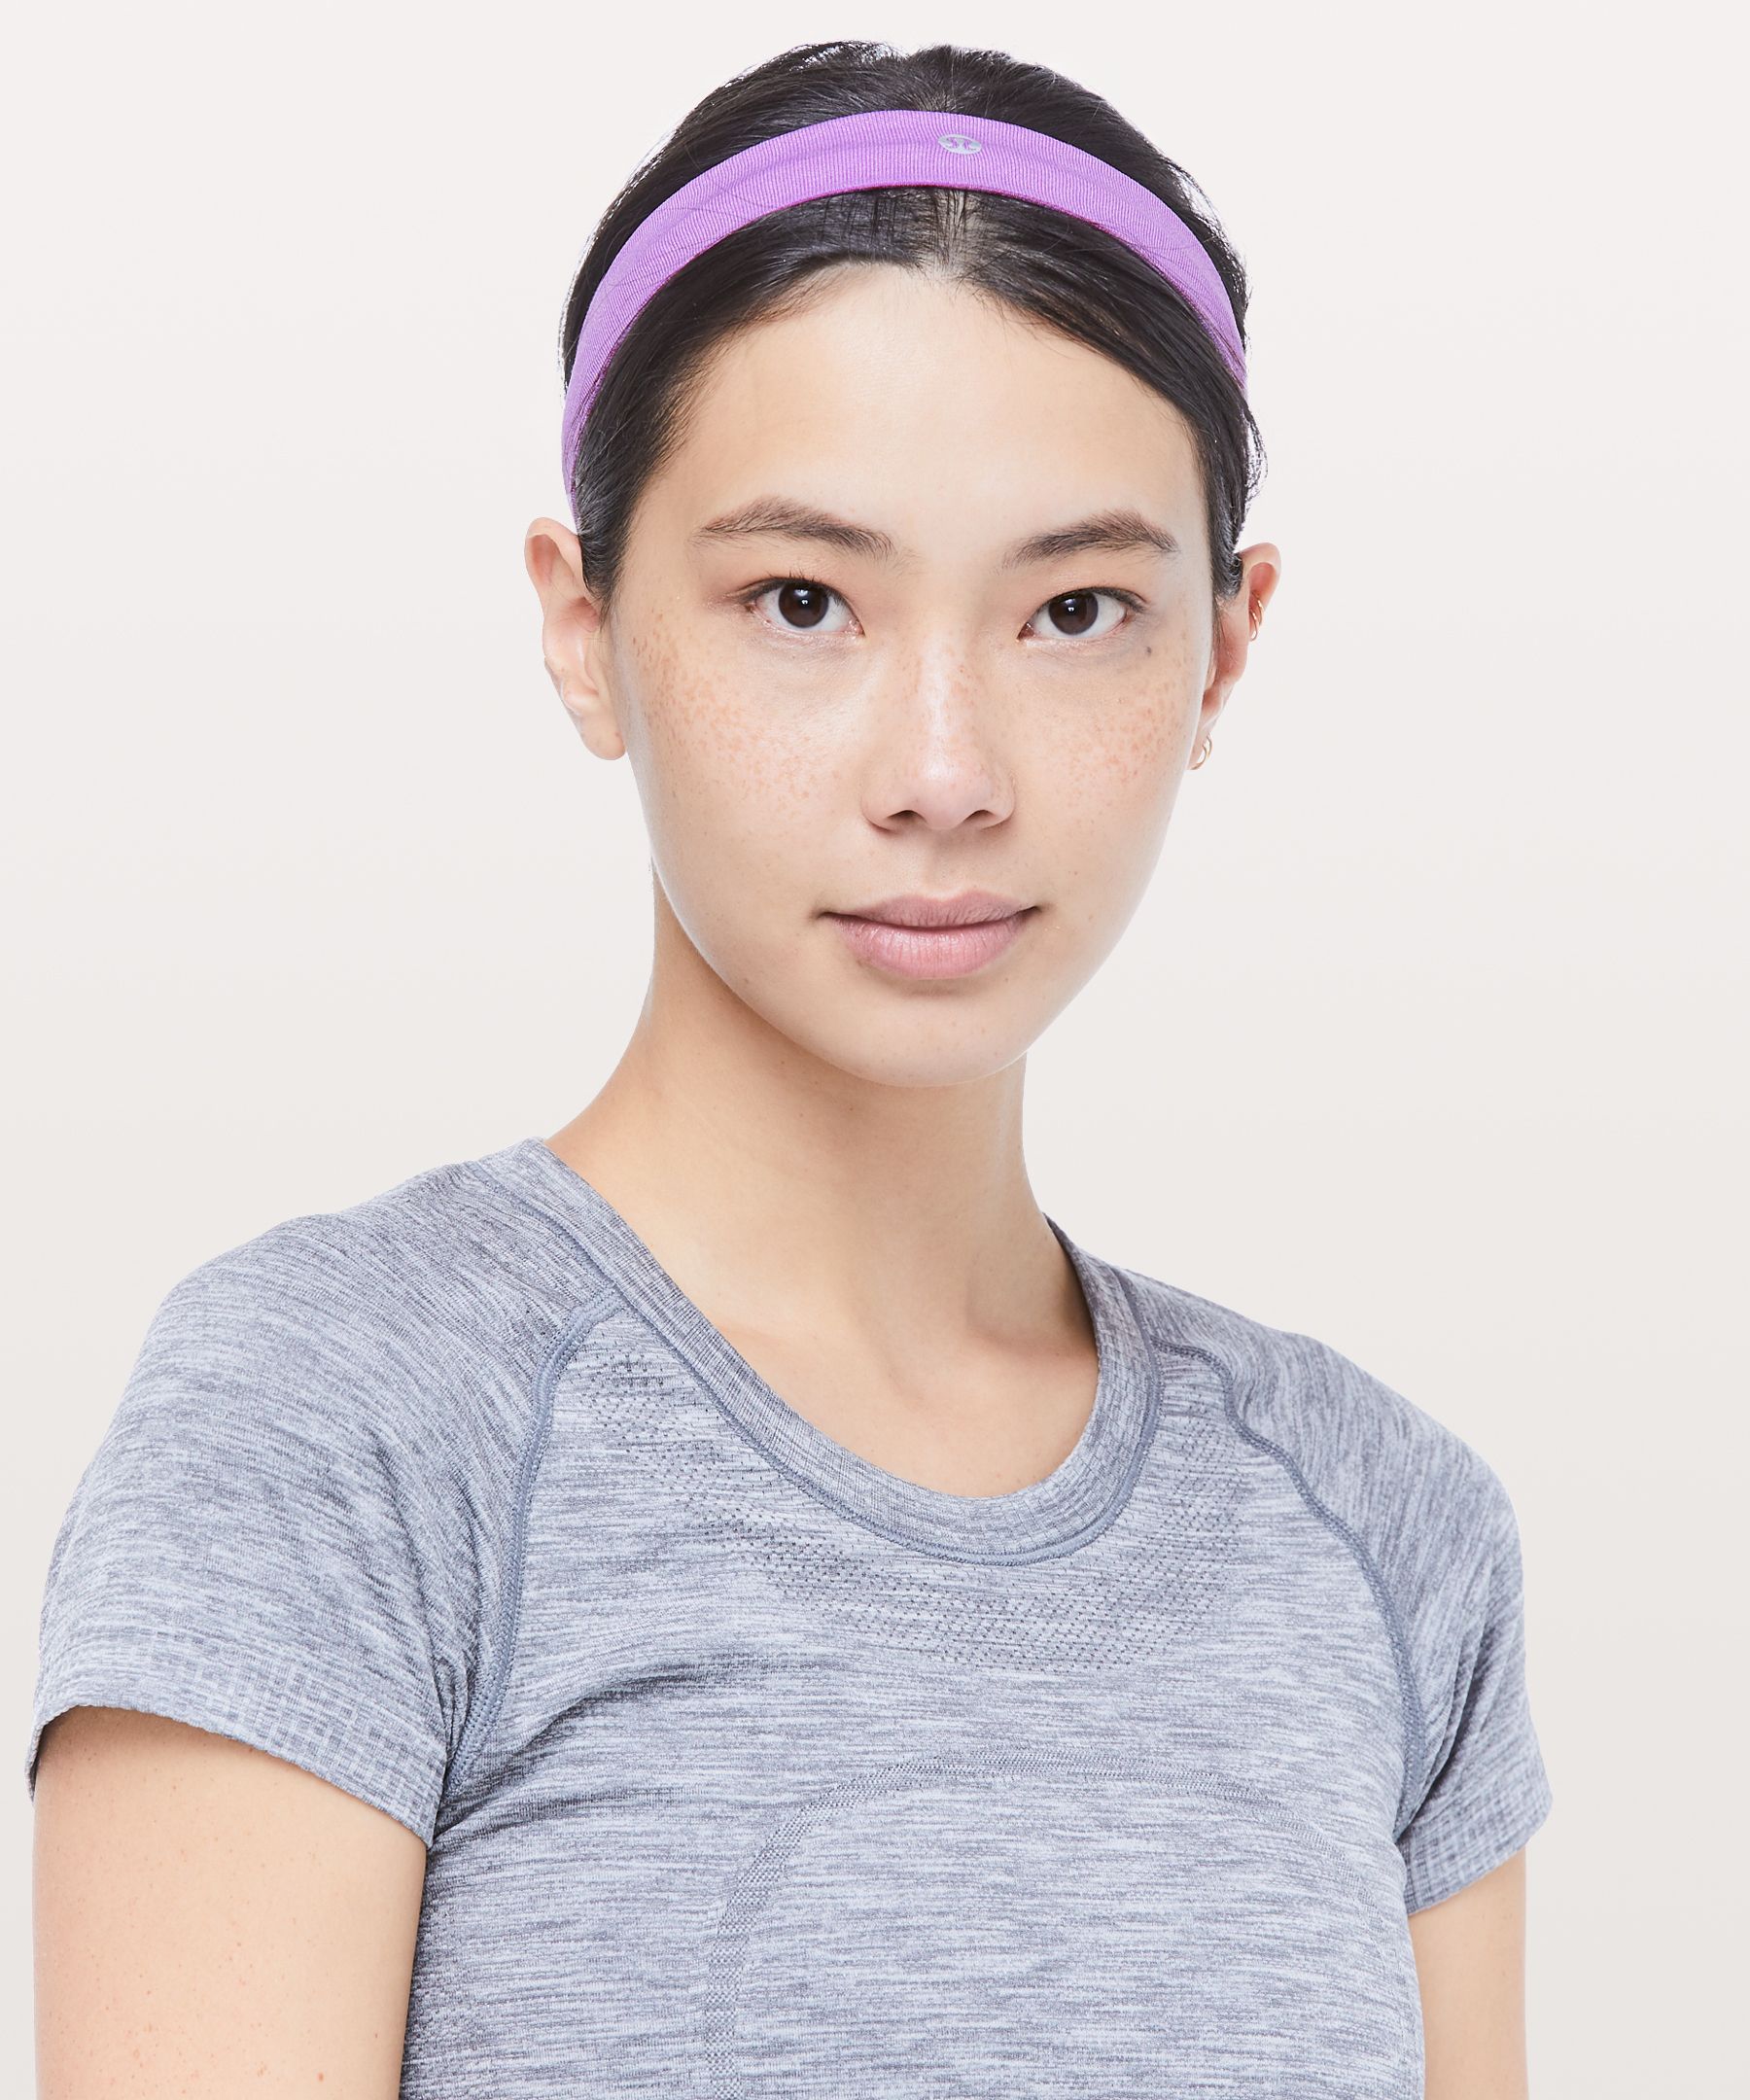 Lululemon Cardio Cross Trainer Headband In Purple Blossom/white